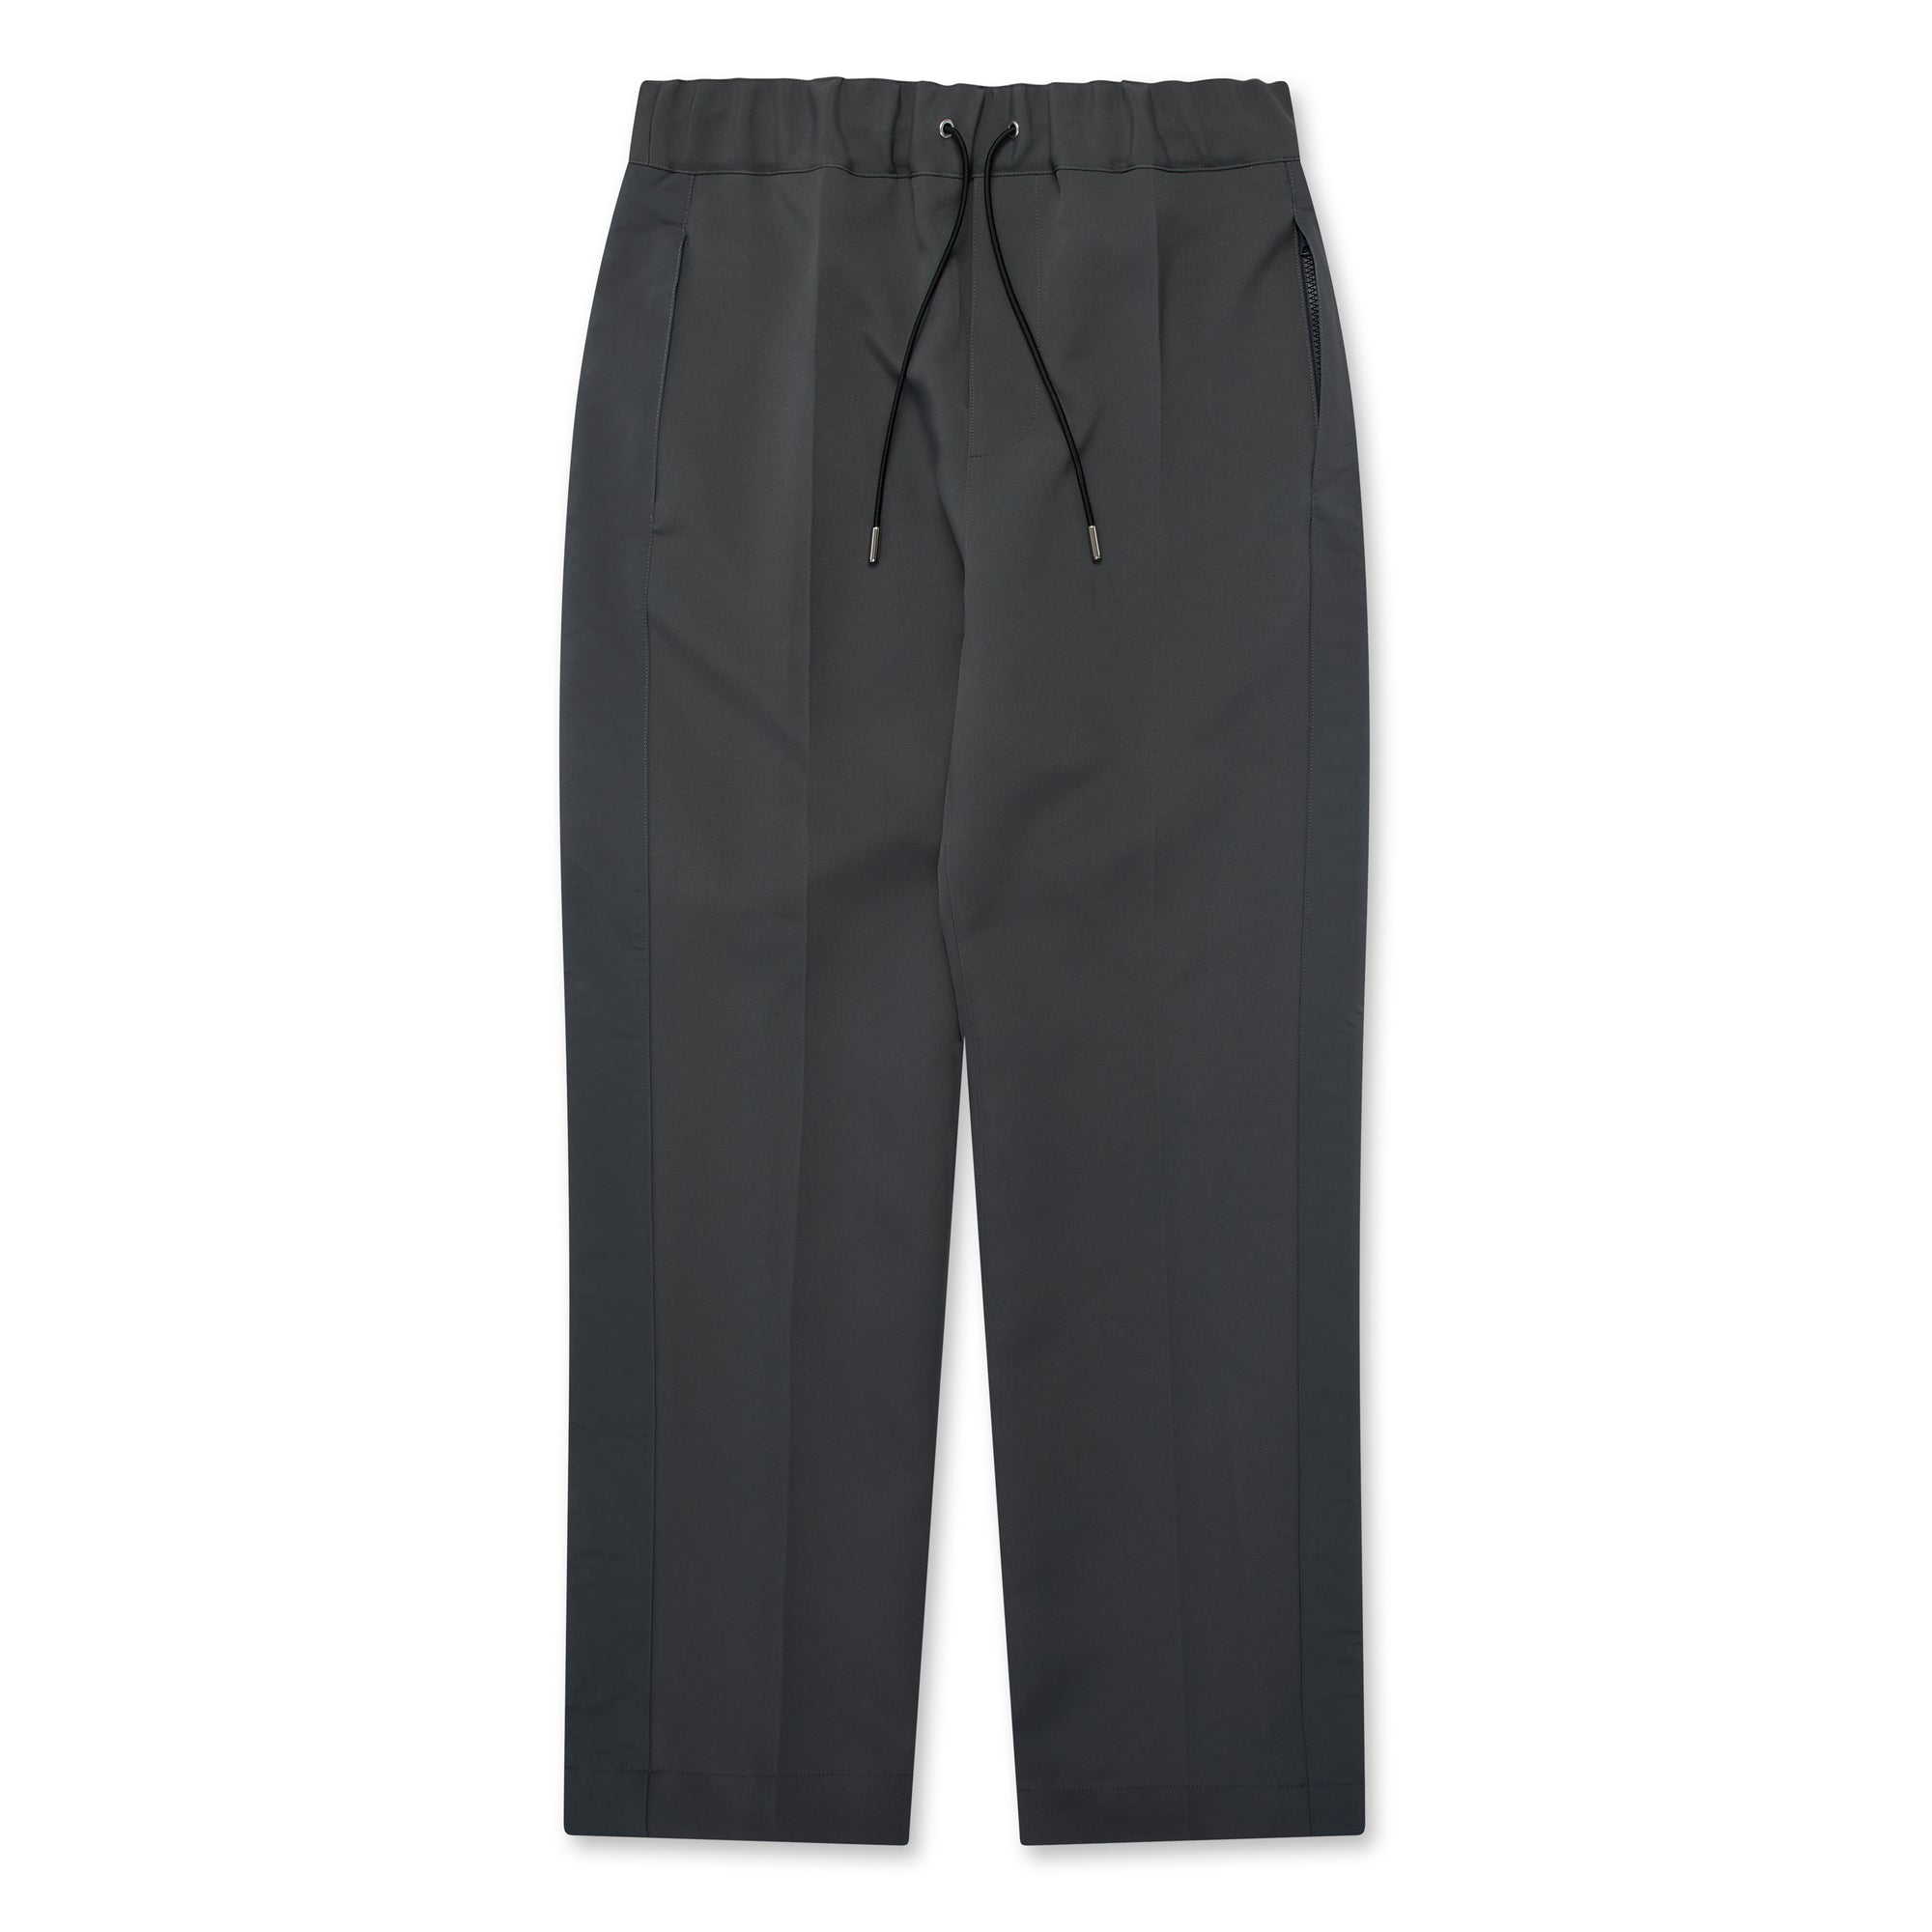 sacai - Men’s Technical Jersey Pants - (Charcoal) view 4